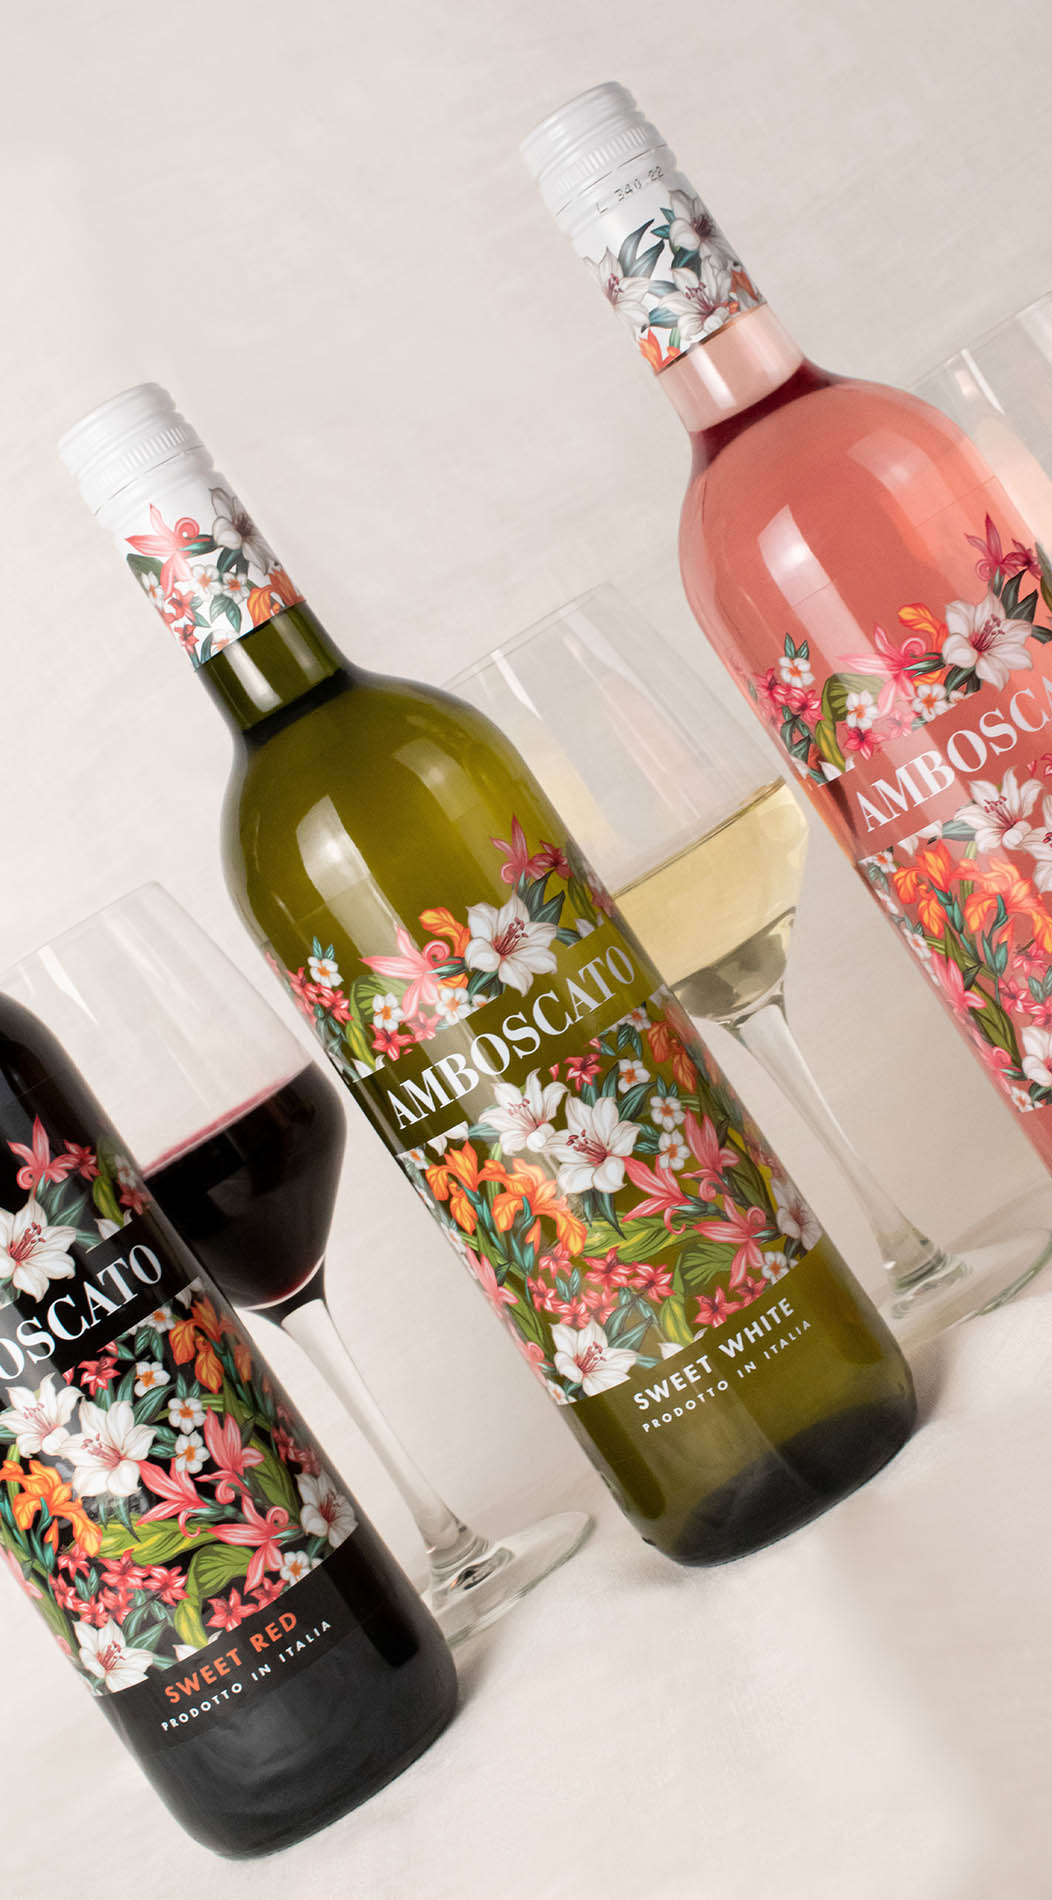 Set of Amboscato Red, White, Squis.it US - – bottles) (6 Rosé